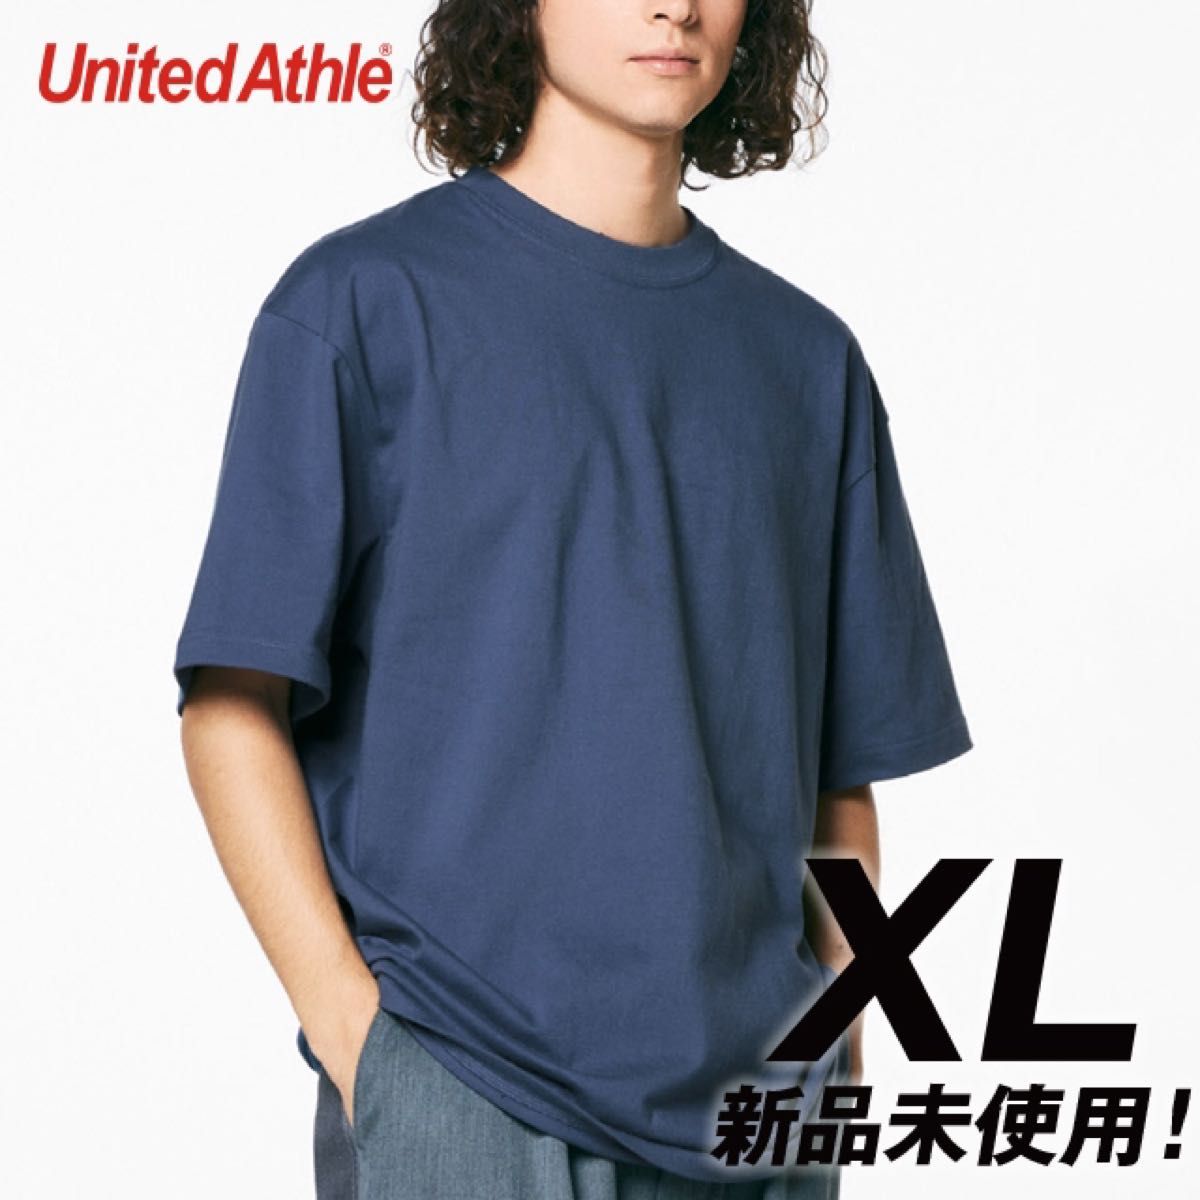 Tシャツ 【5001-01】XL ヘイジーブラック ヘイジーネイビー 2枚セット 圧縮発送